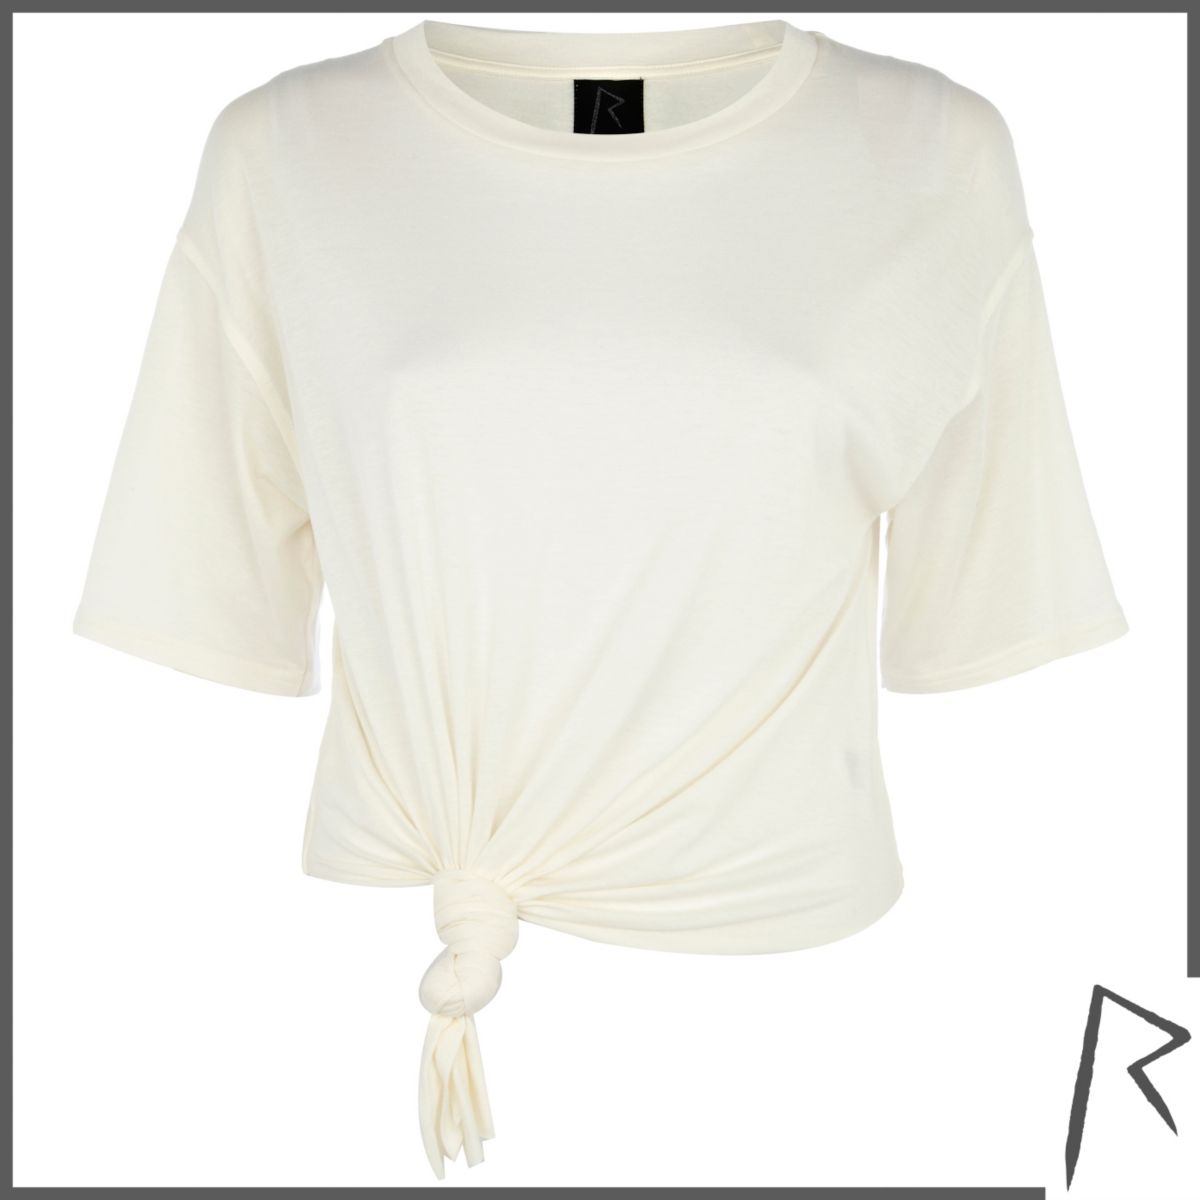 Cream Rihanna knot front cropped t-shirt - Tops - Sale - women